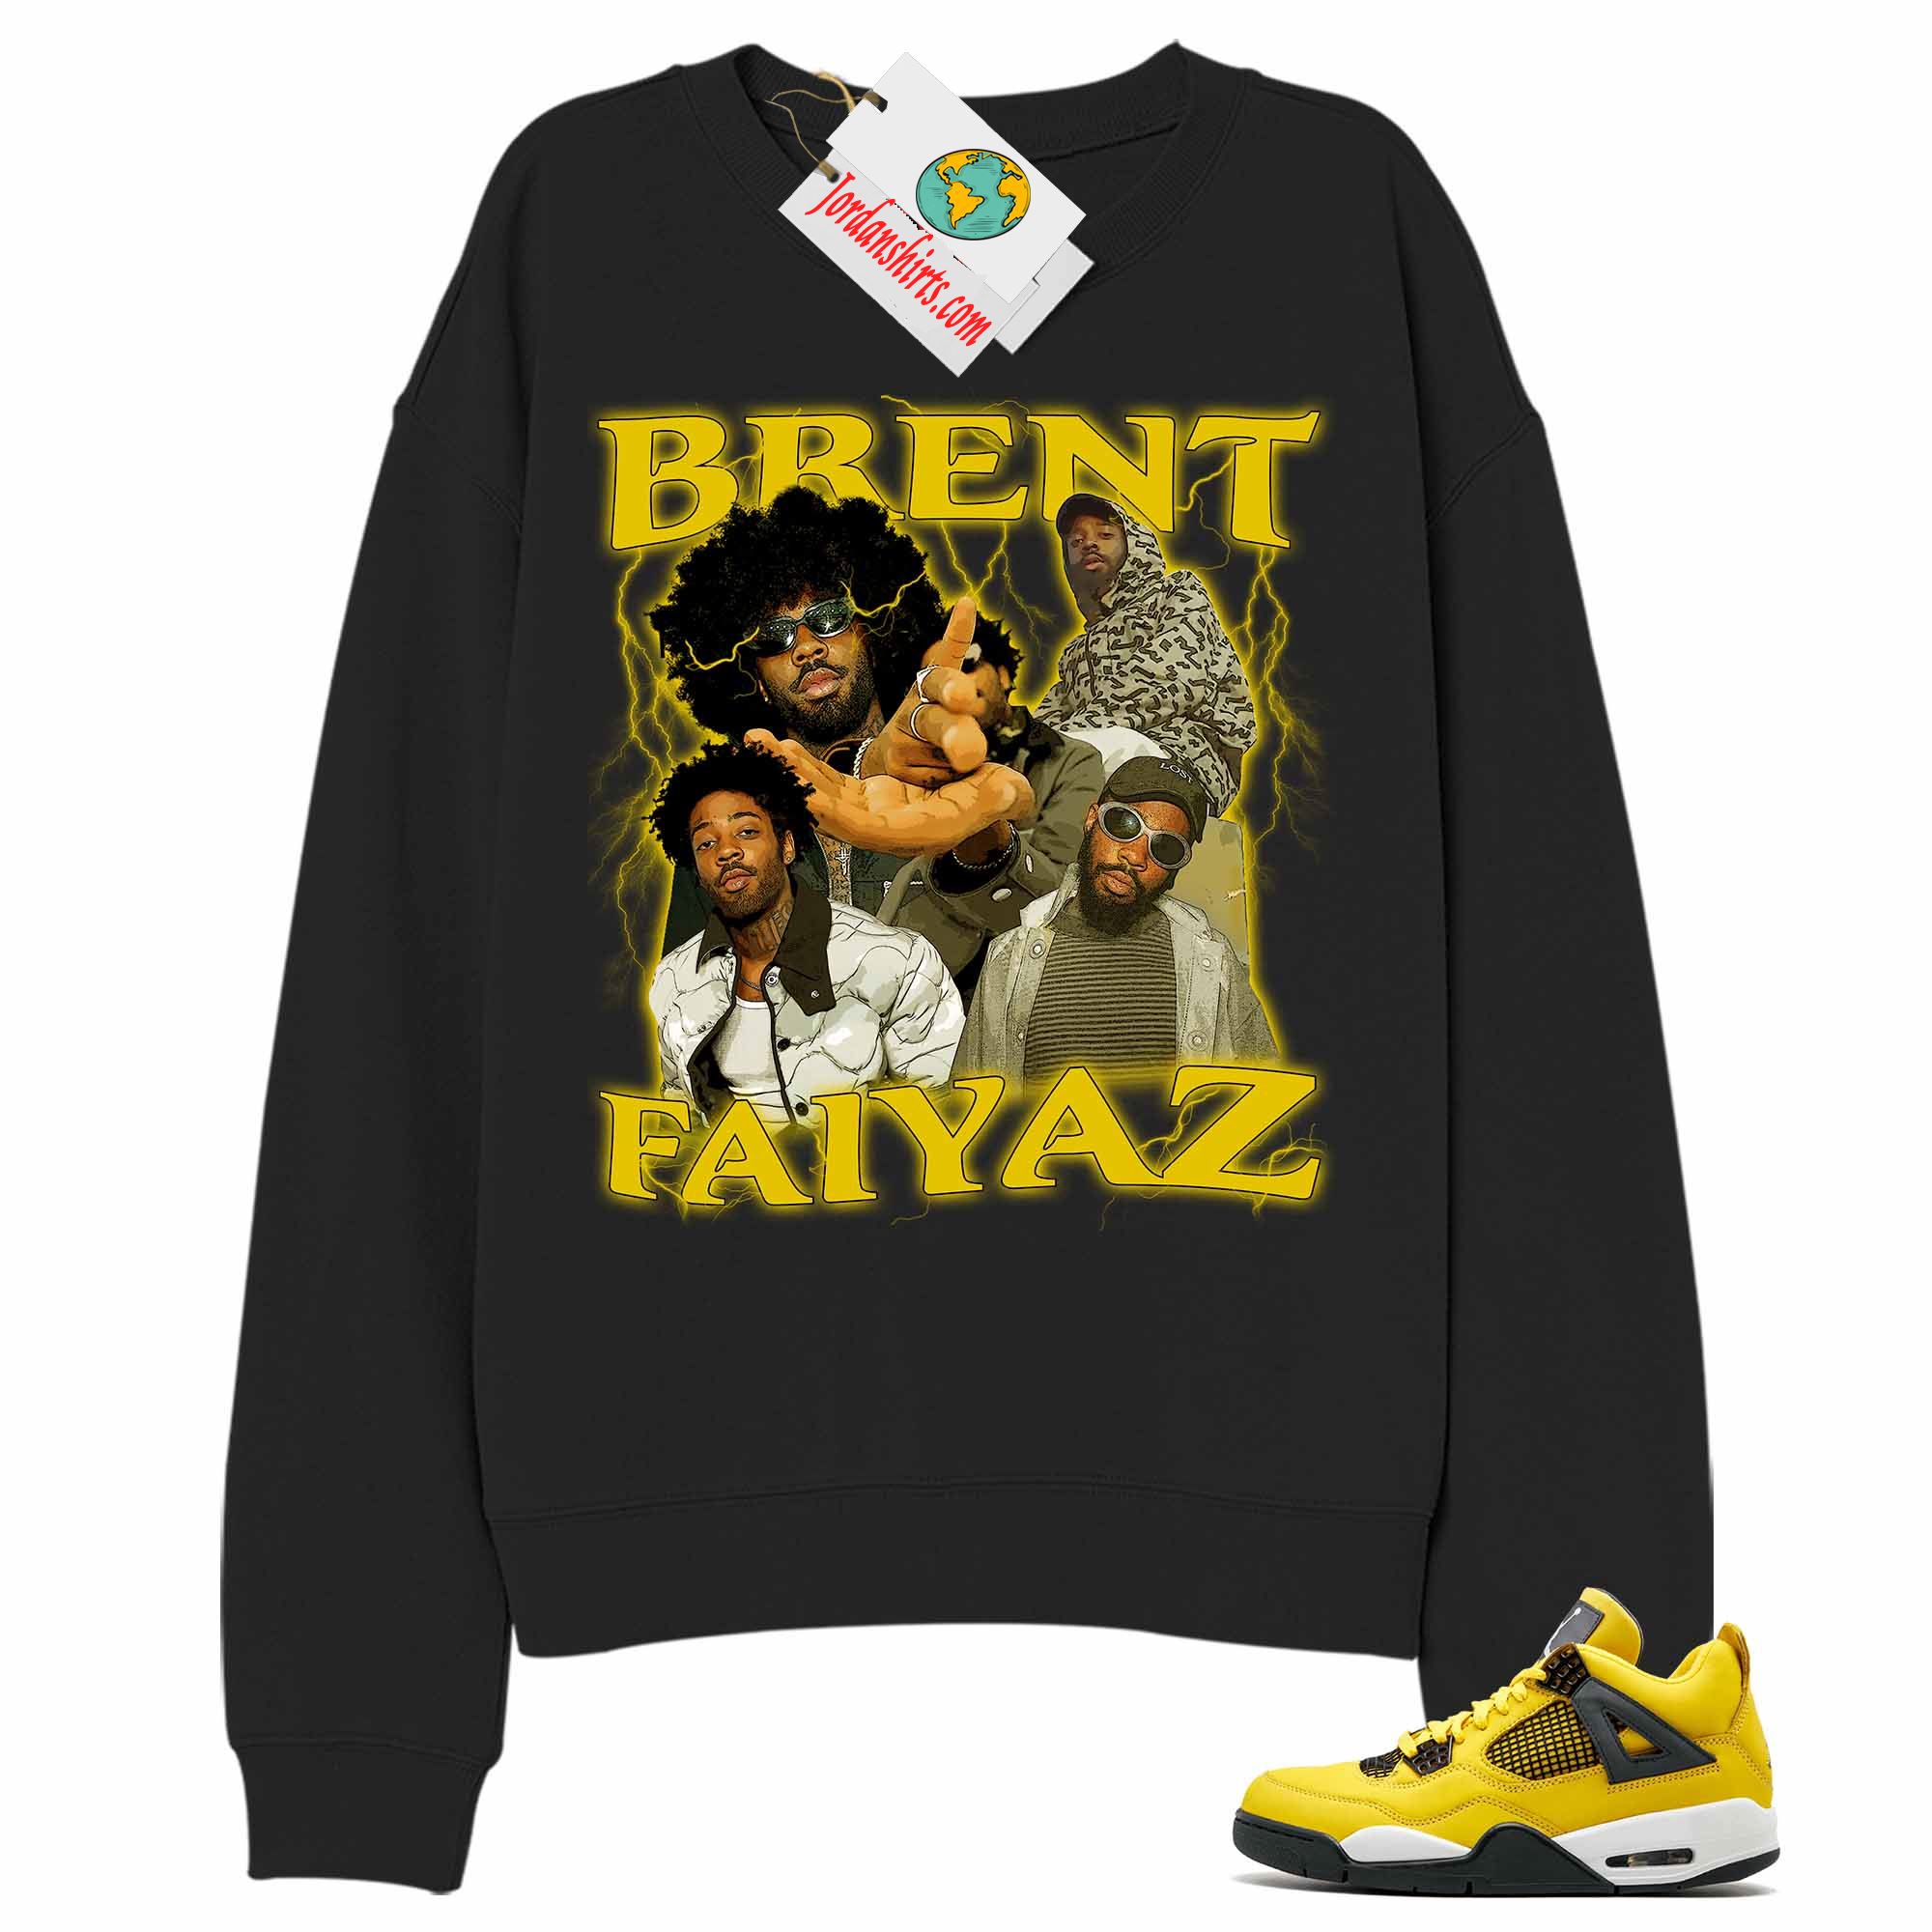 Jordan 4 Sweatshirt, Brent Faiyaz Retro Vintage 90s Hip Hop Raptees Black Sweatshirt Air Jordan 4 Tour Yellow Lightning 4s Full Size Up To 5xl